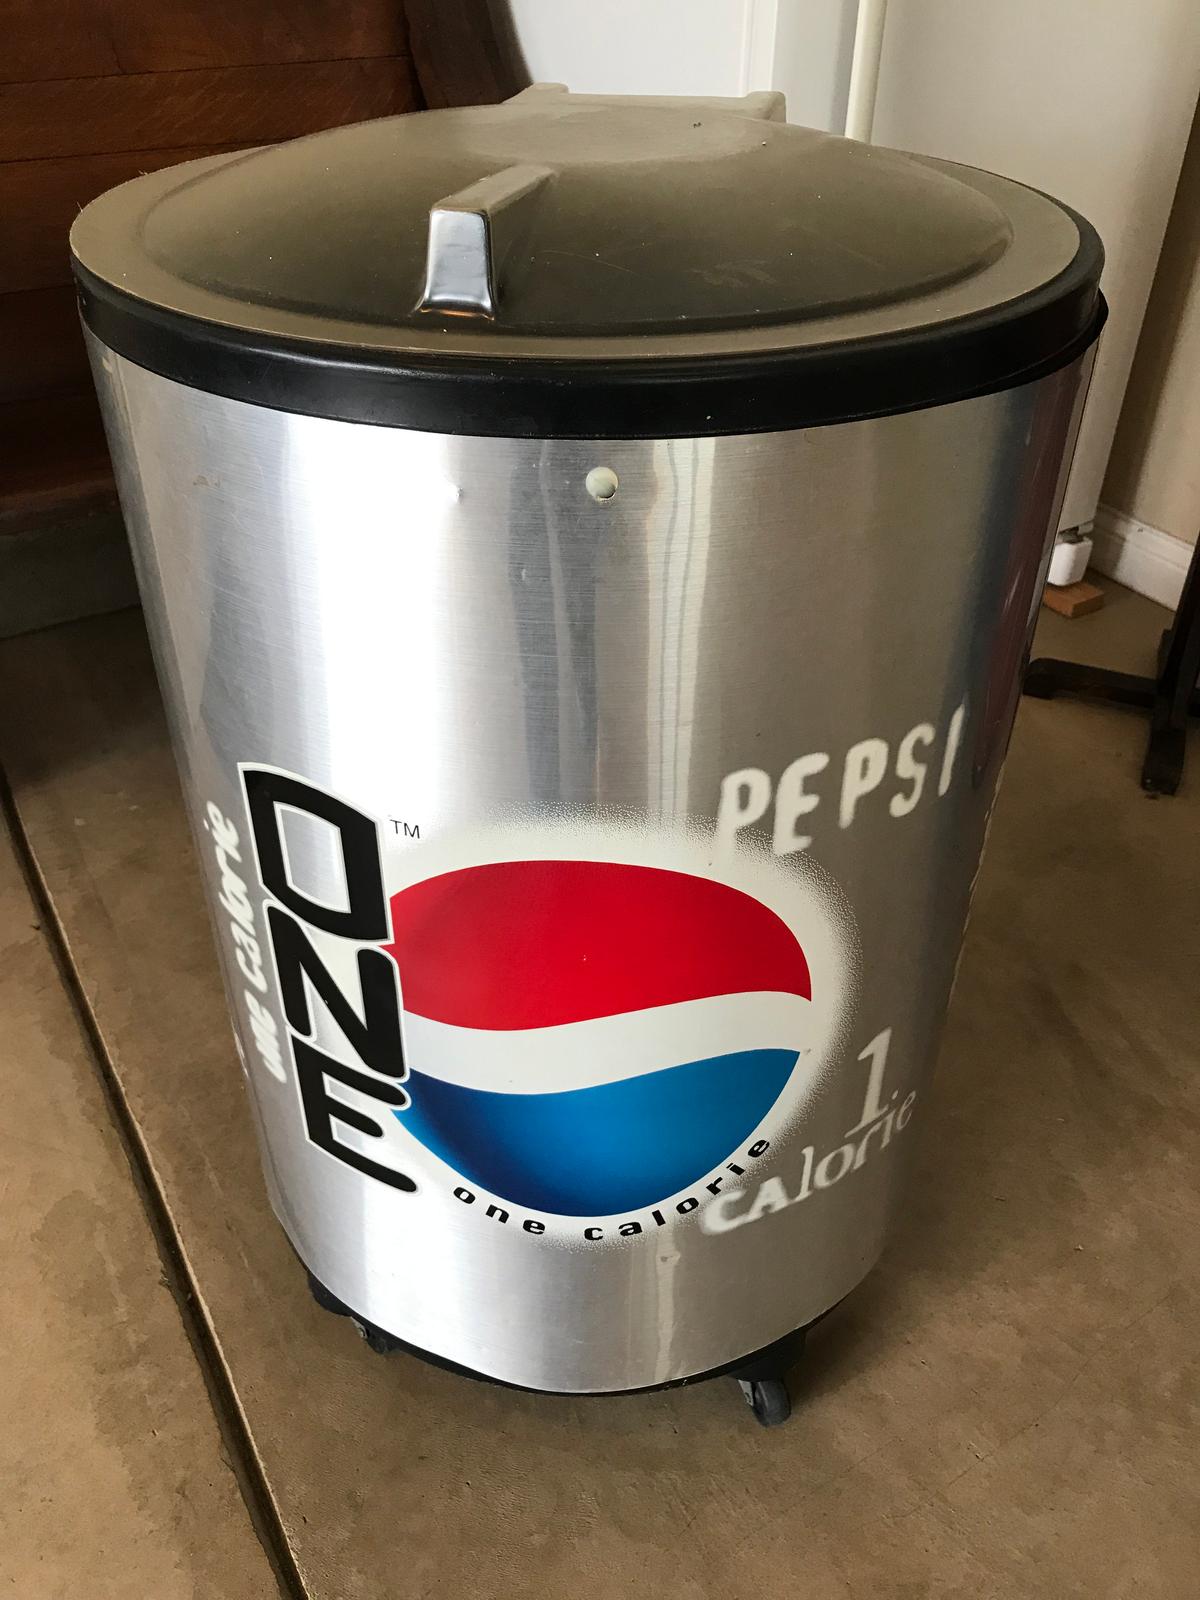 Pepsi-One Floor Model Cooler  34" Tall